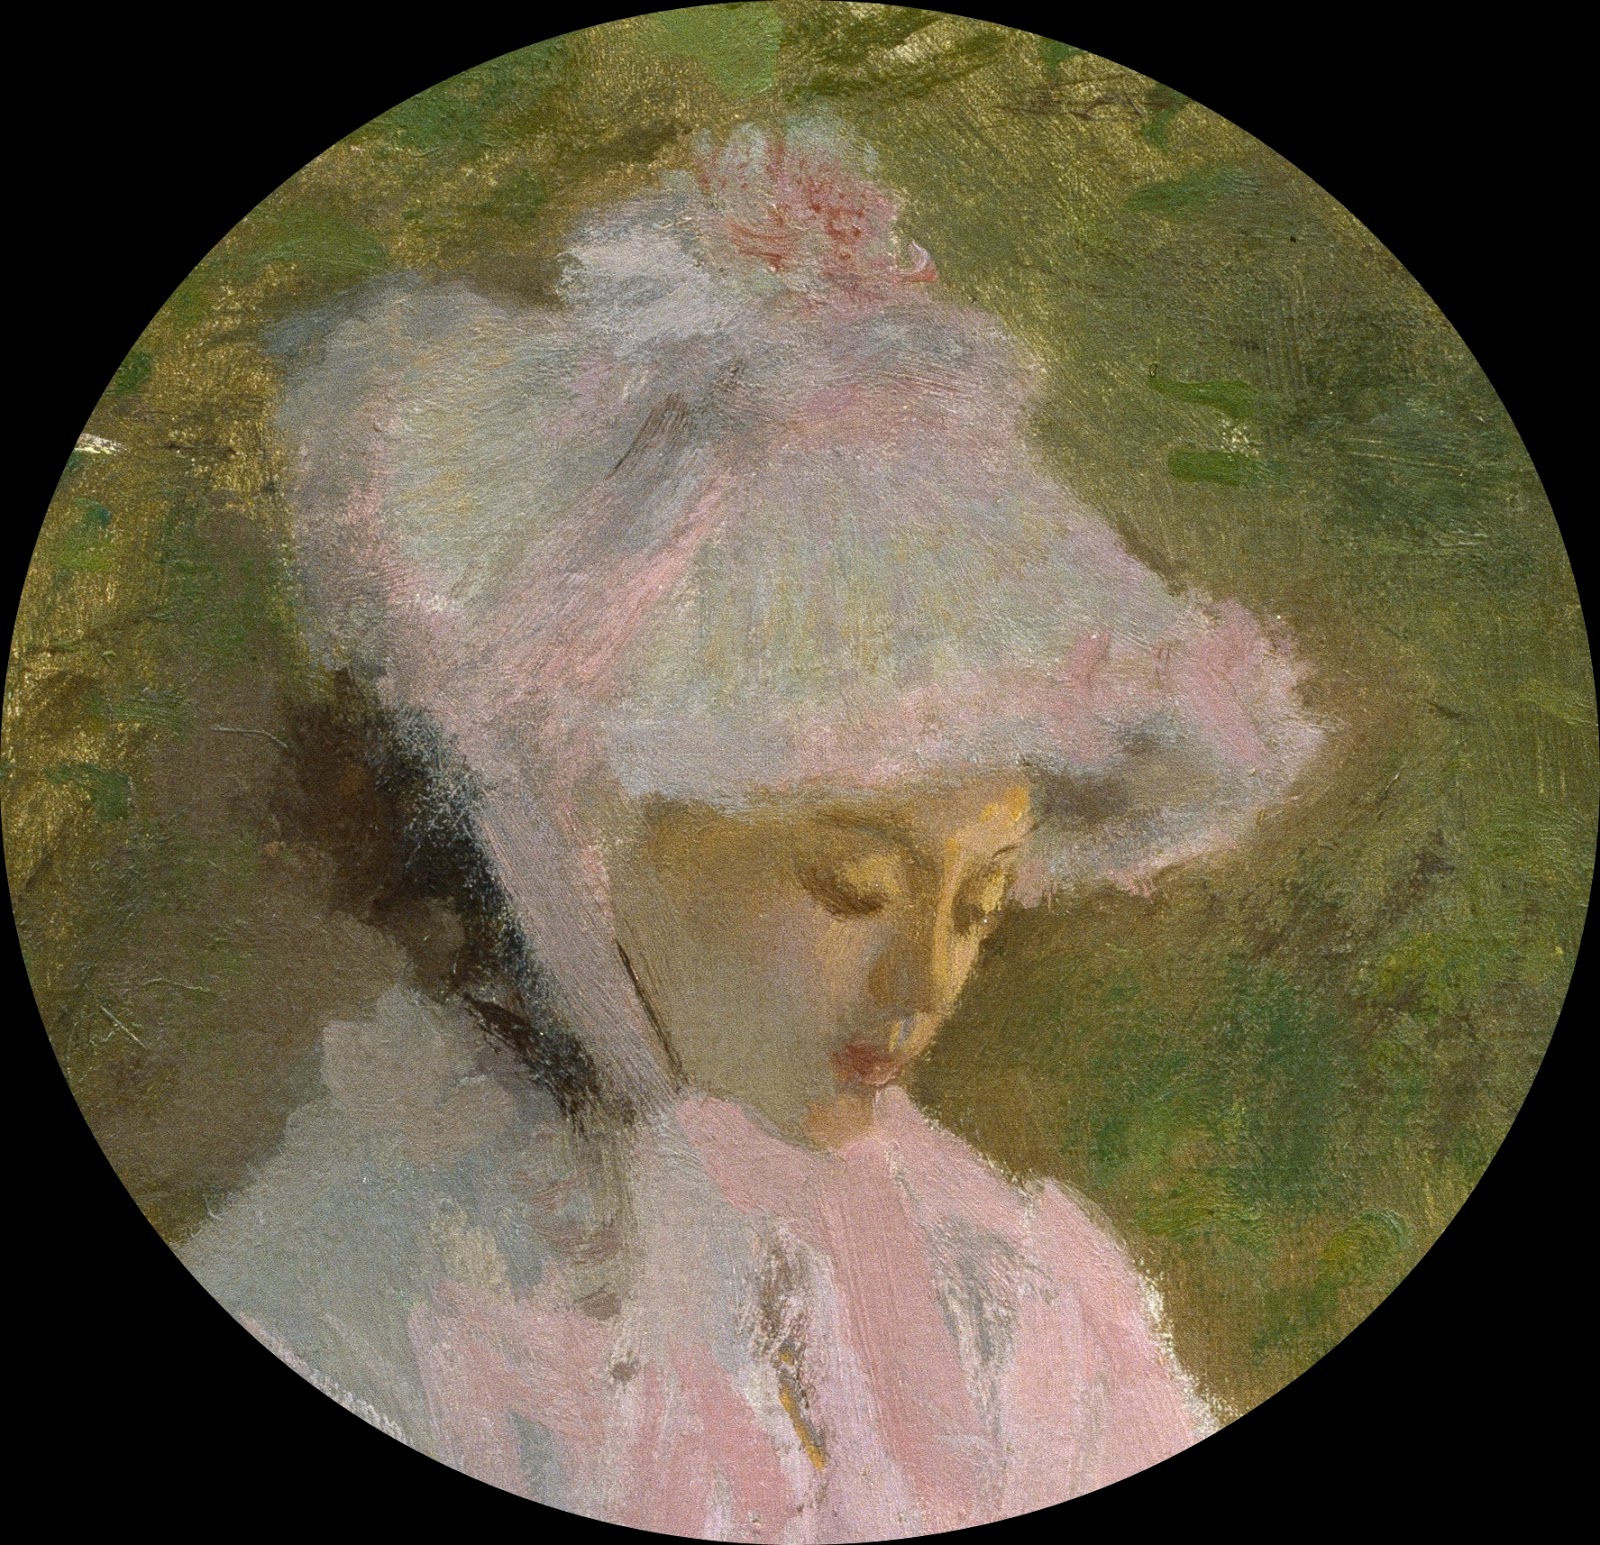 Claude+Monet-1840-1926 (704).jpg